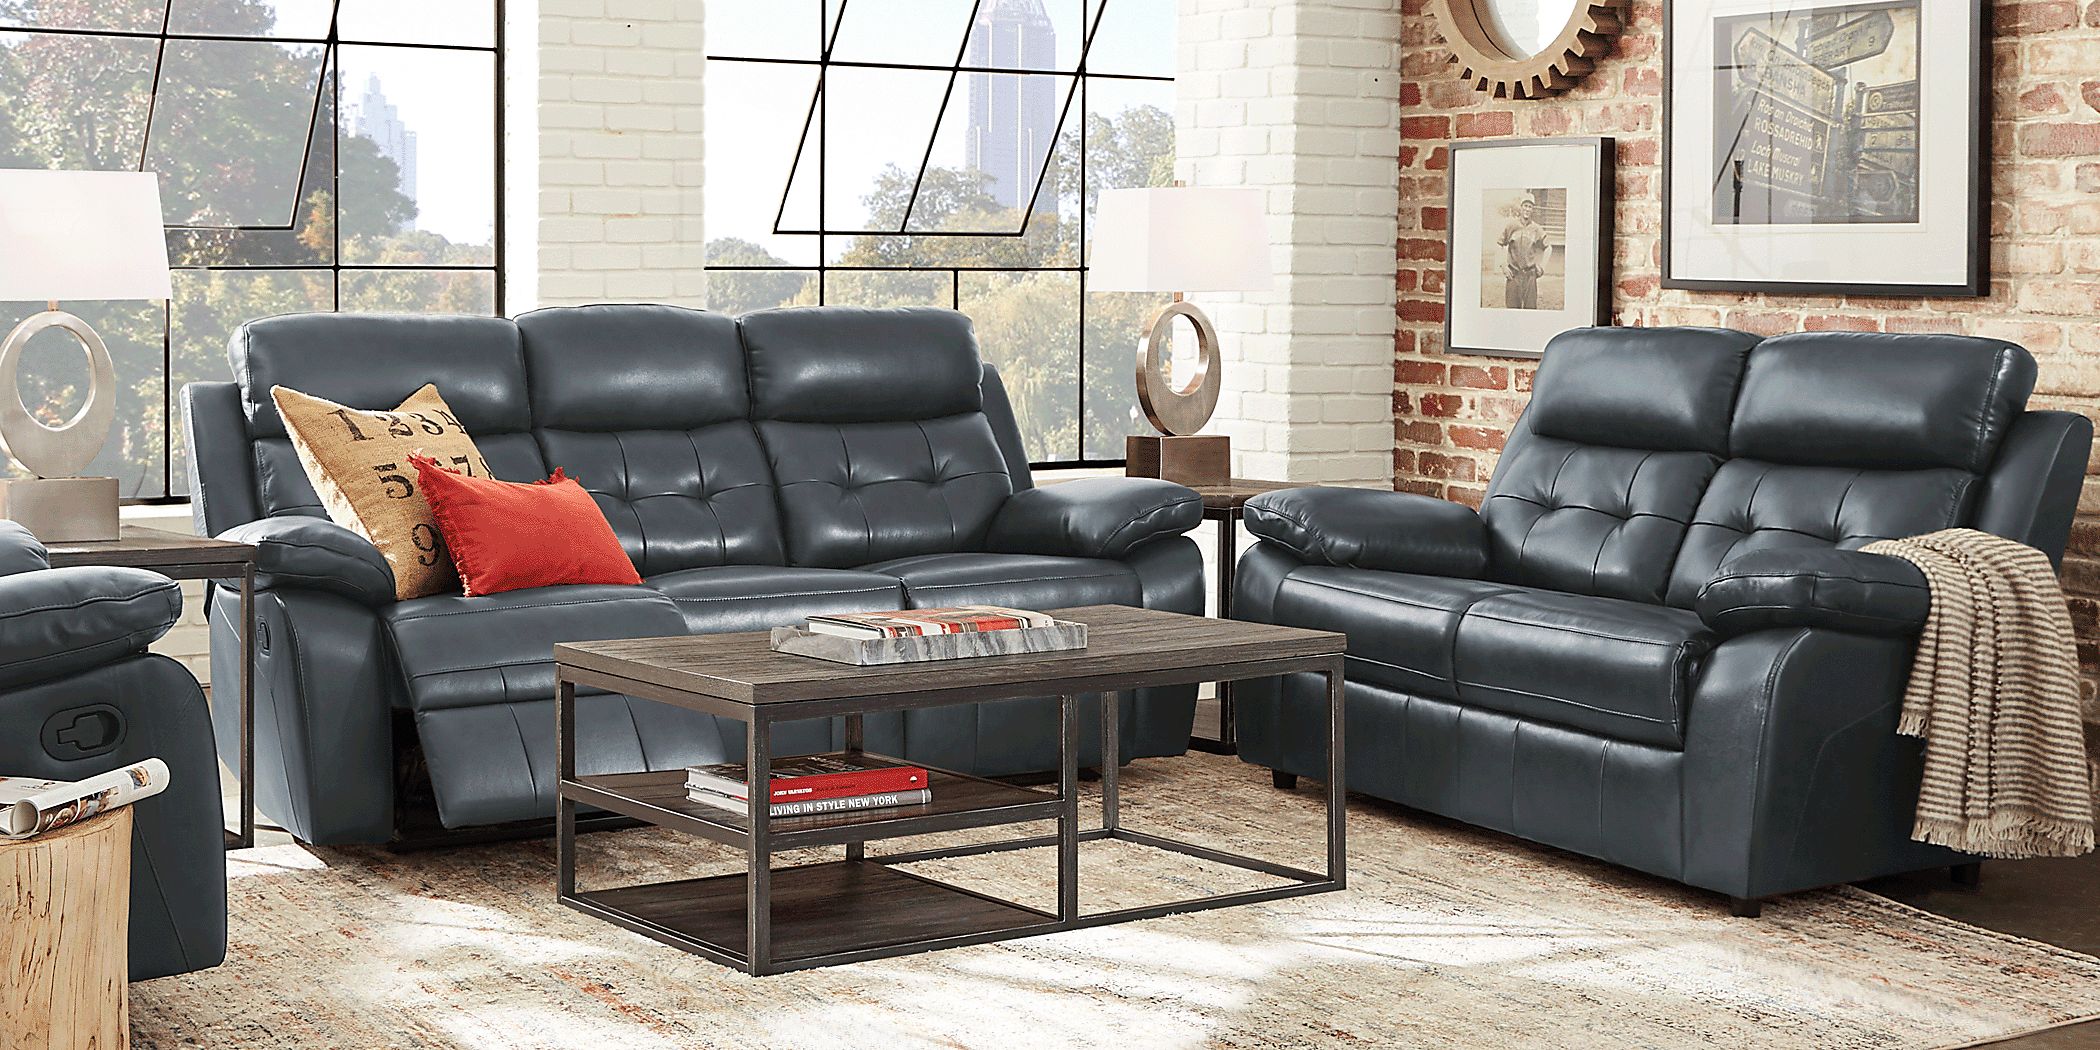 antonin blue leather reclining sofa